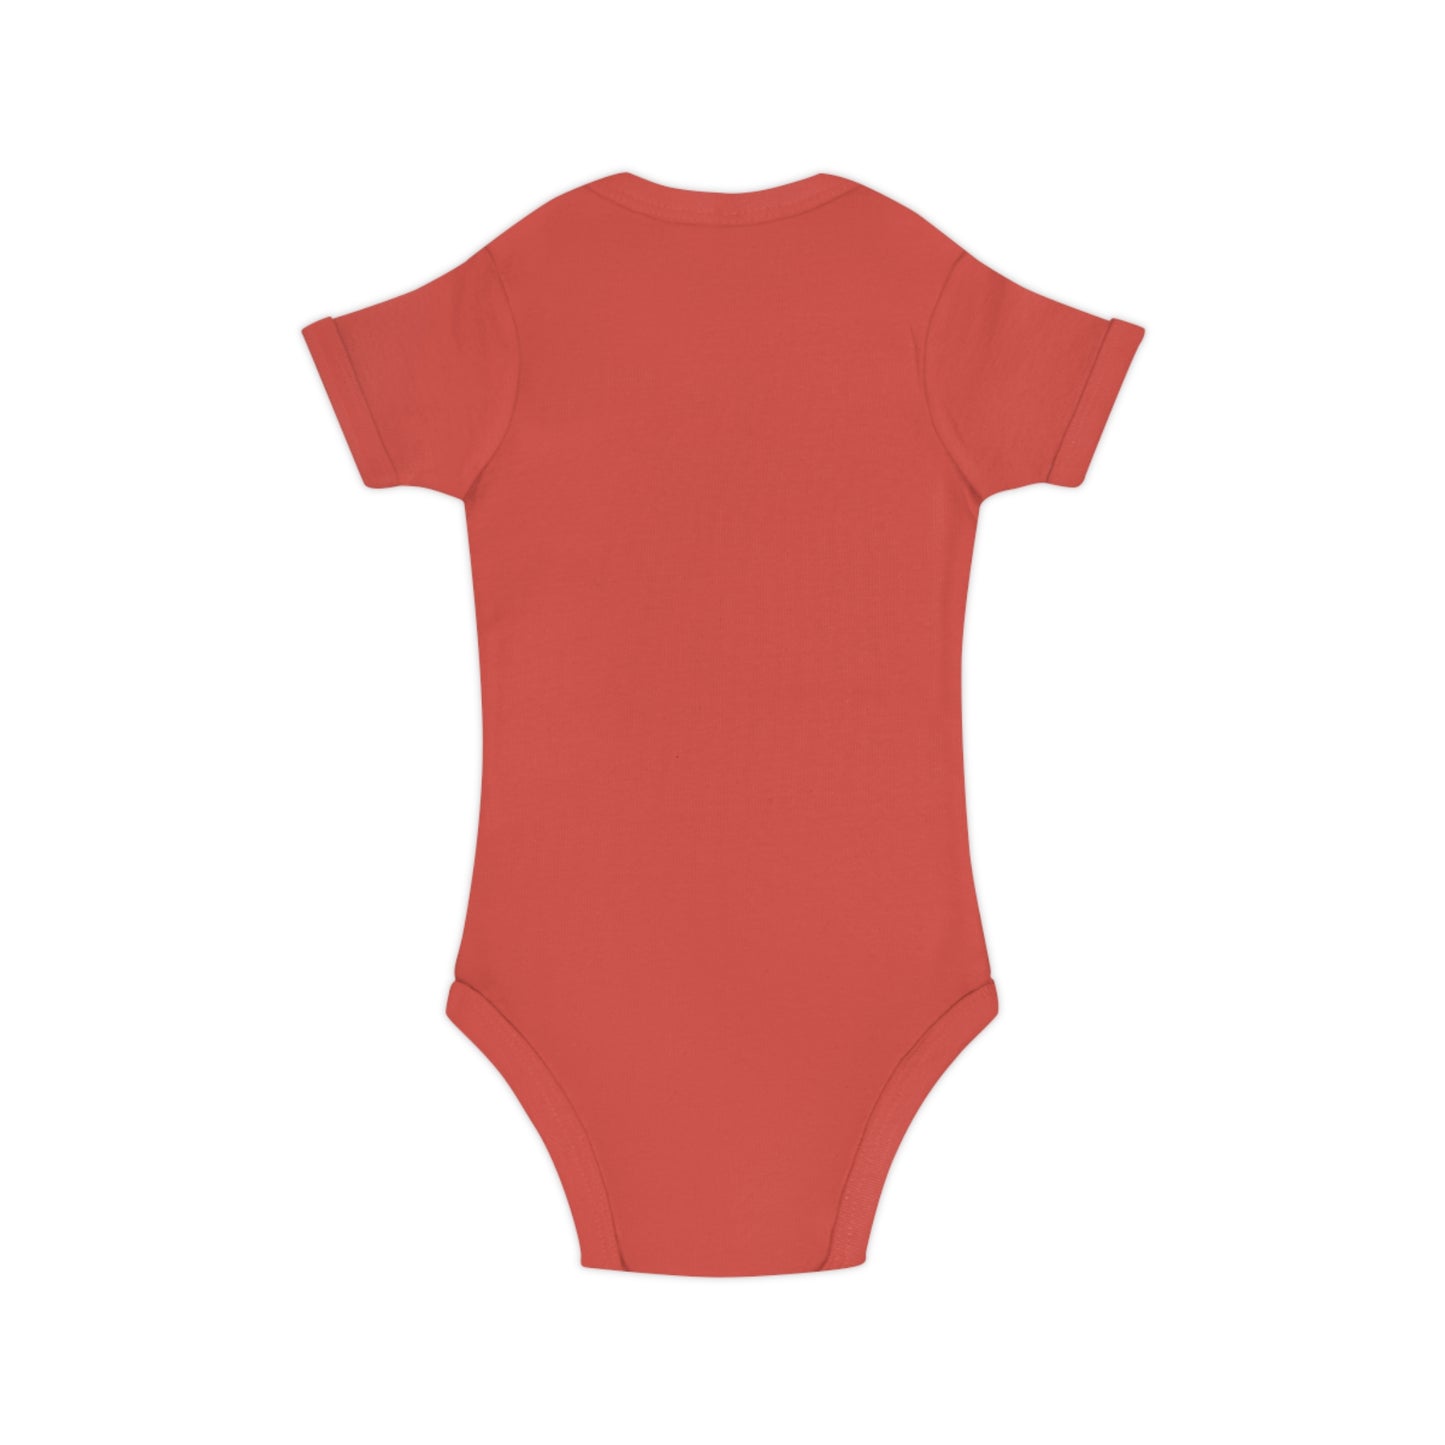 Little Tracker® Elephant Cotton Baby Bodysuit